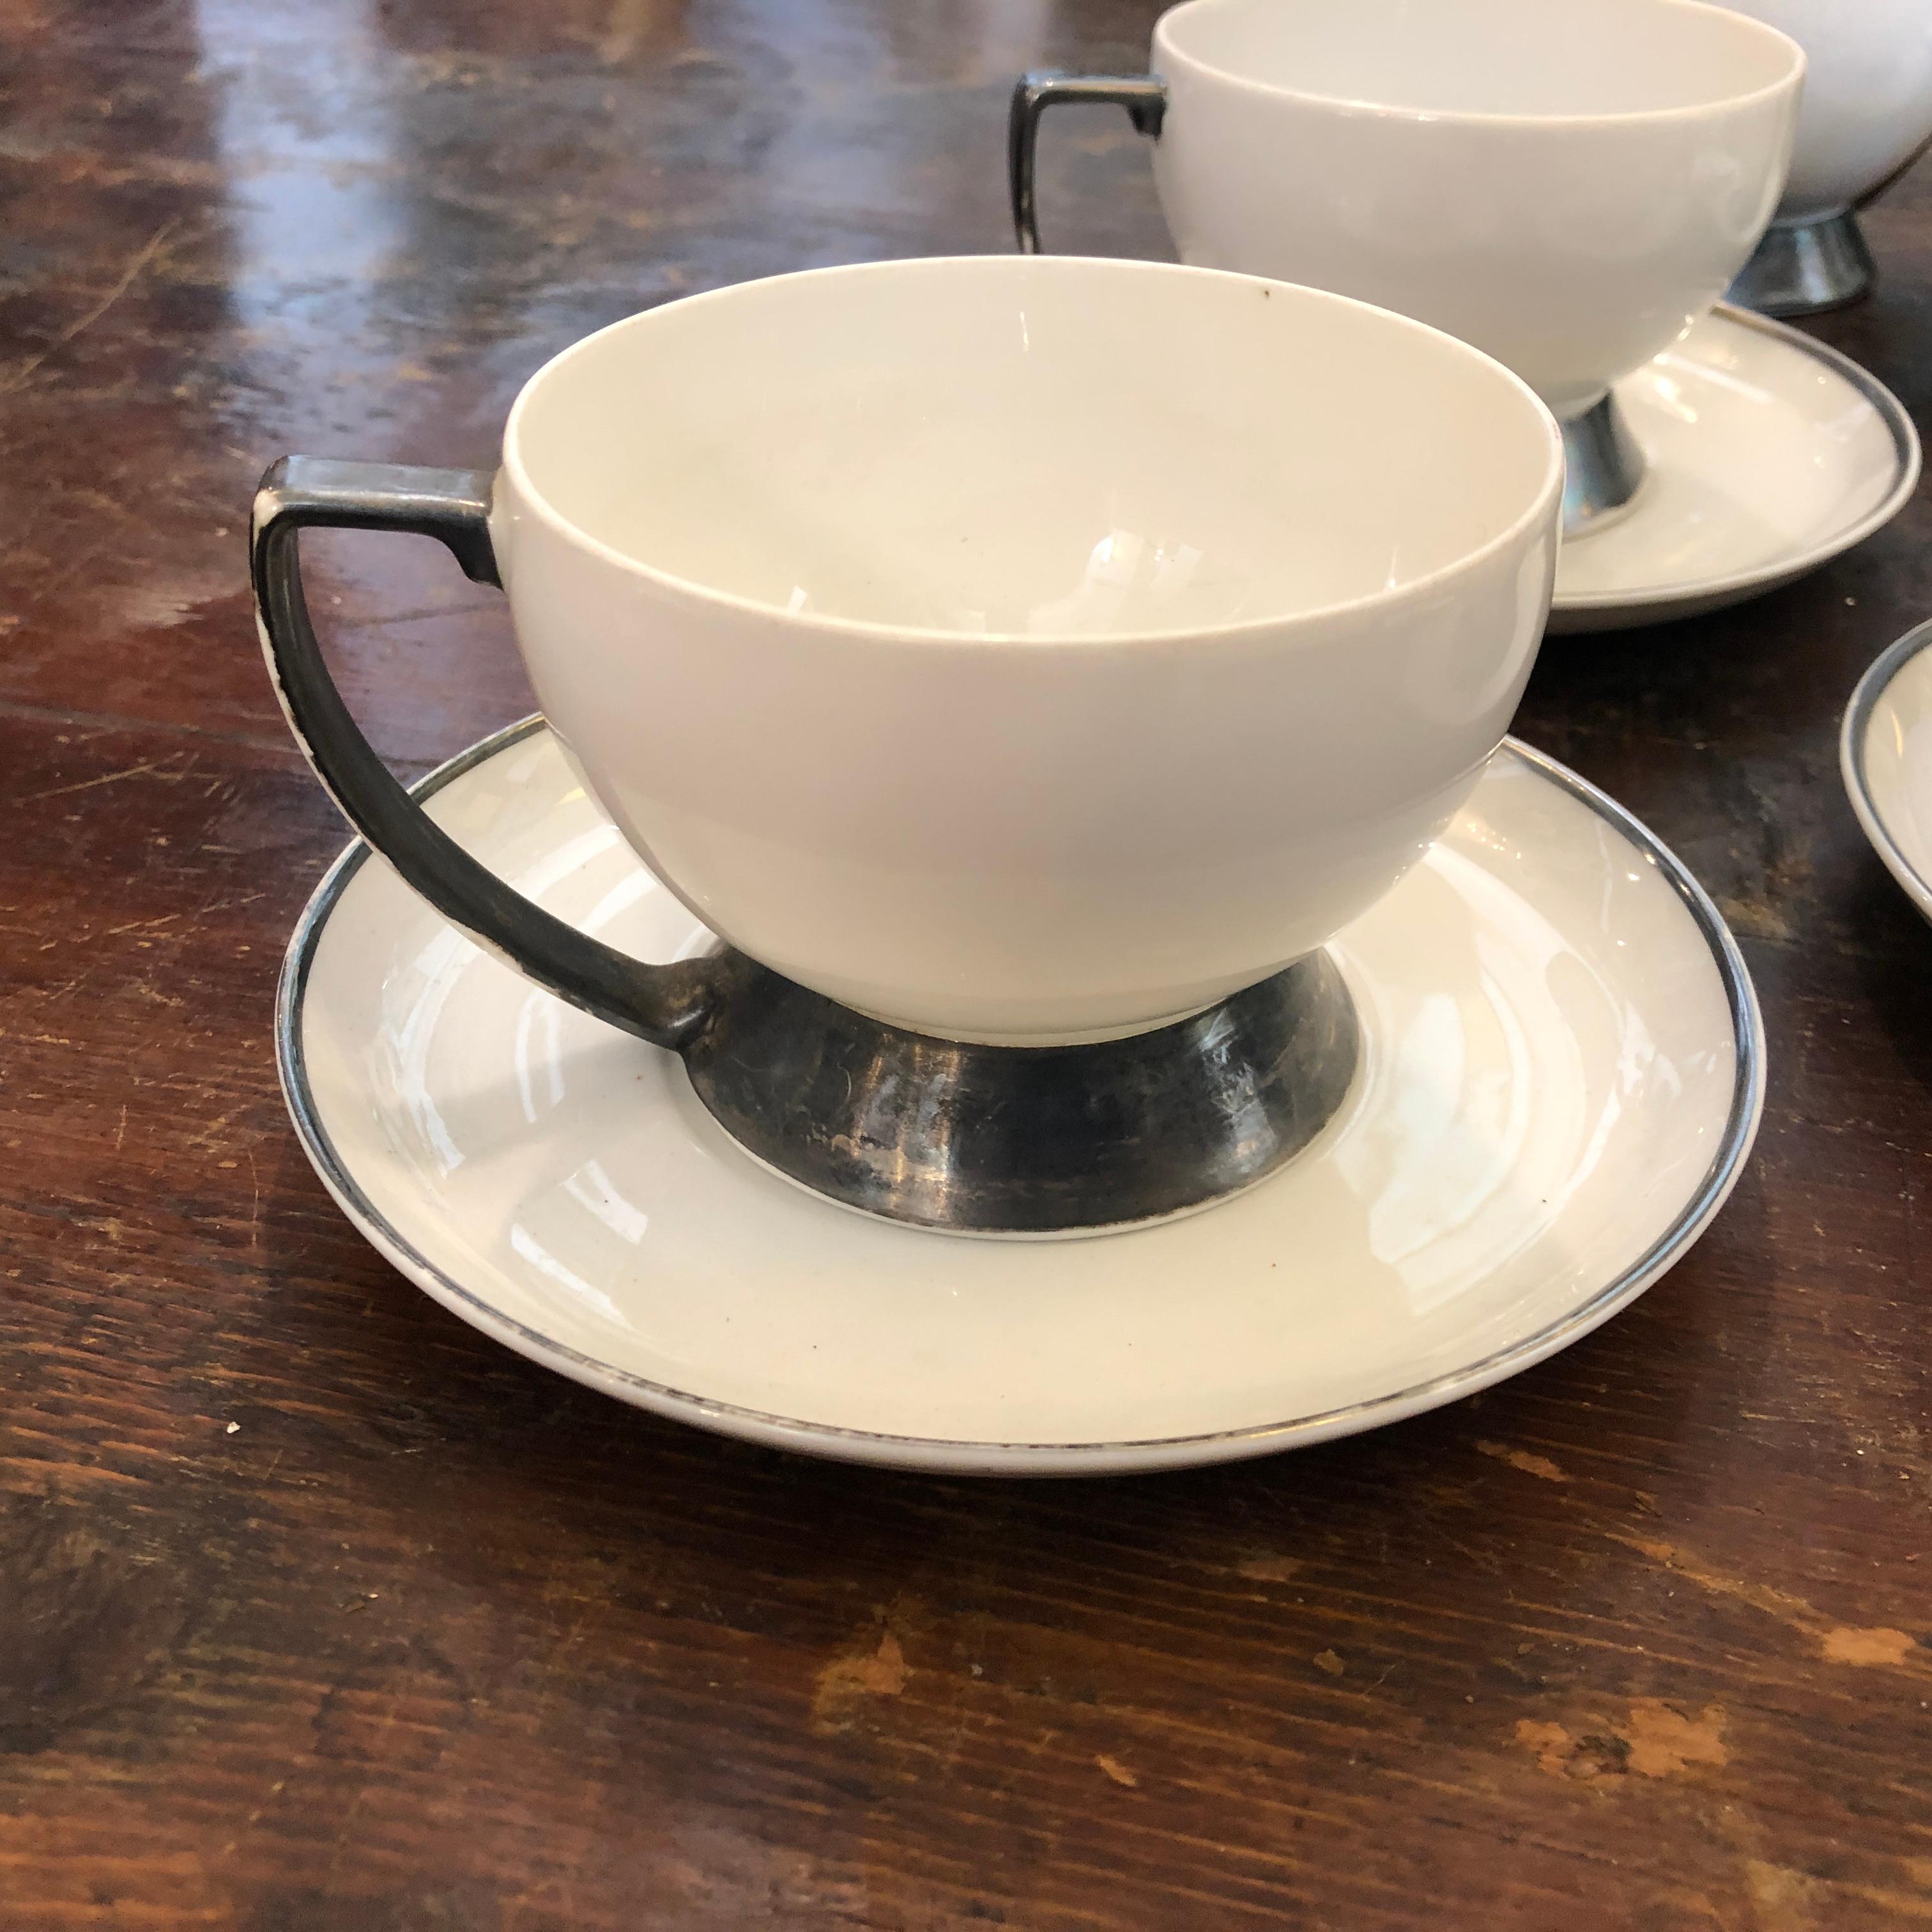 Stylish Art Deco Italian tea set by Guido Andlovitz for Verbano Laveno. Good conditions overall, size of tea cup cm 11 x 9 H 7.